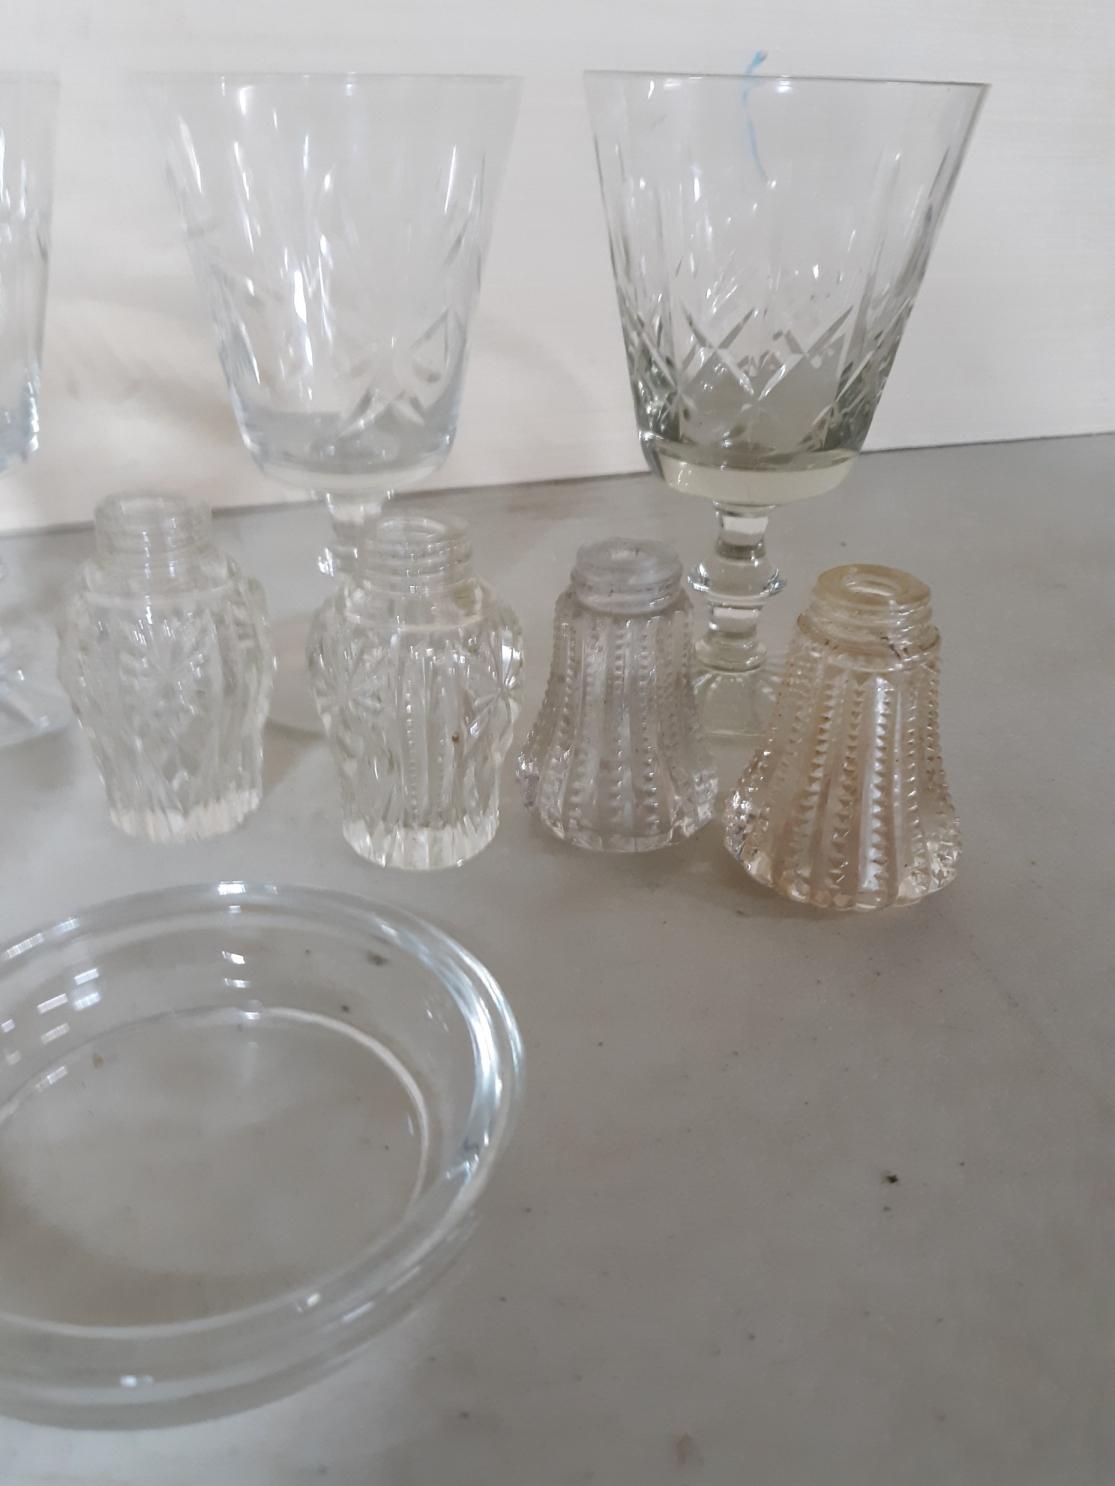 Clear Glass Lot, Stemware, S&P w/no lids, Custard cups, etc.